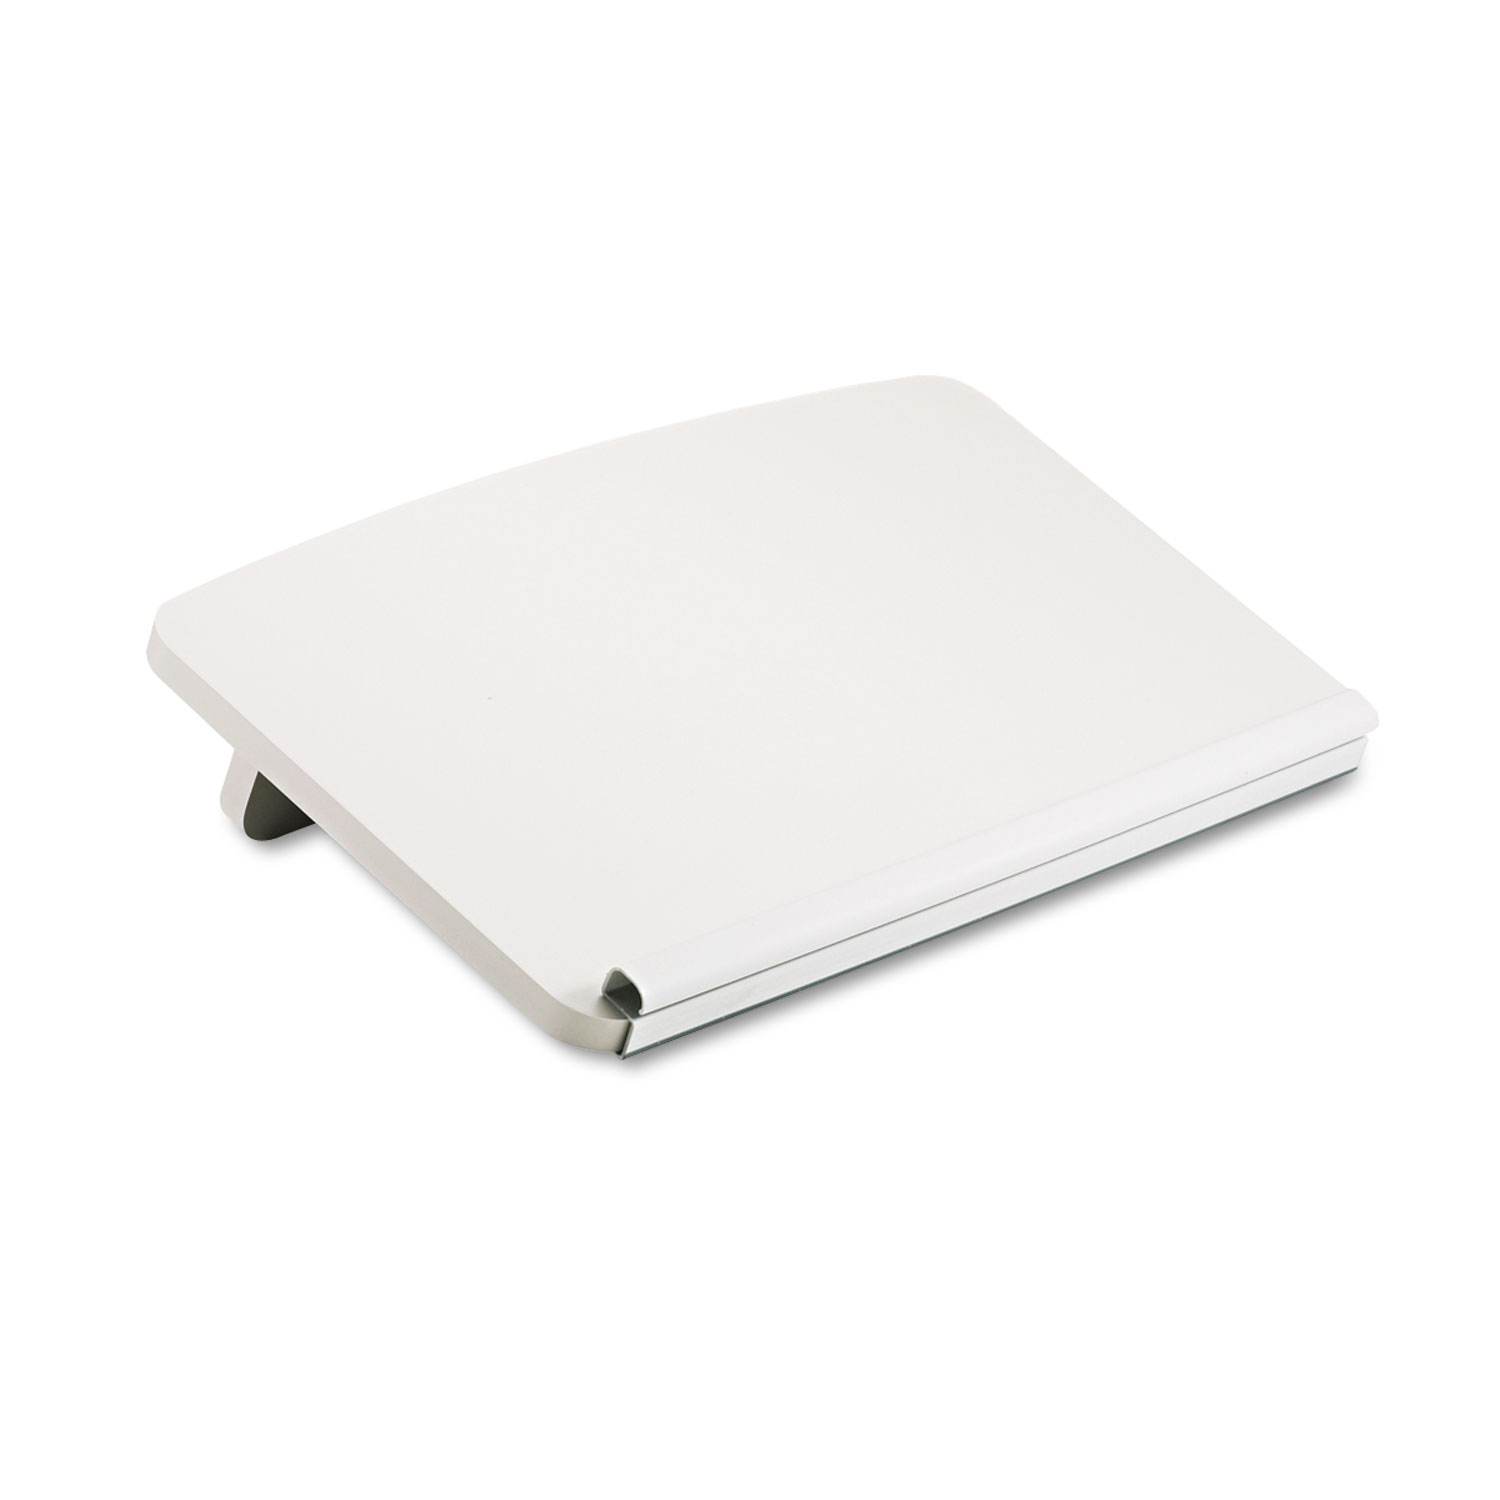  Safco 2156 Ergo-Comfort Read/Write Freestanding Desktop Copy Stand, Wood, Gray (SAF2156) 